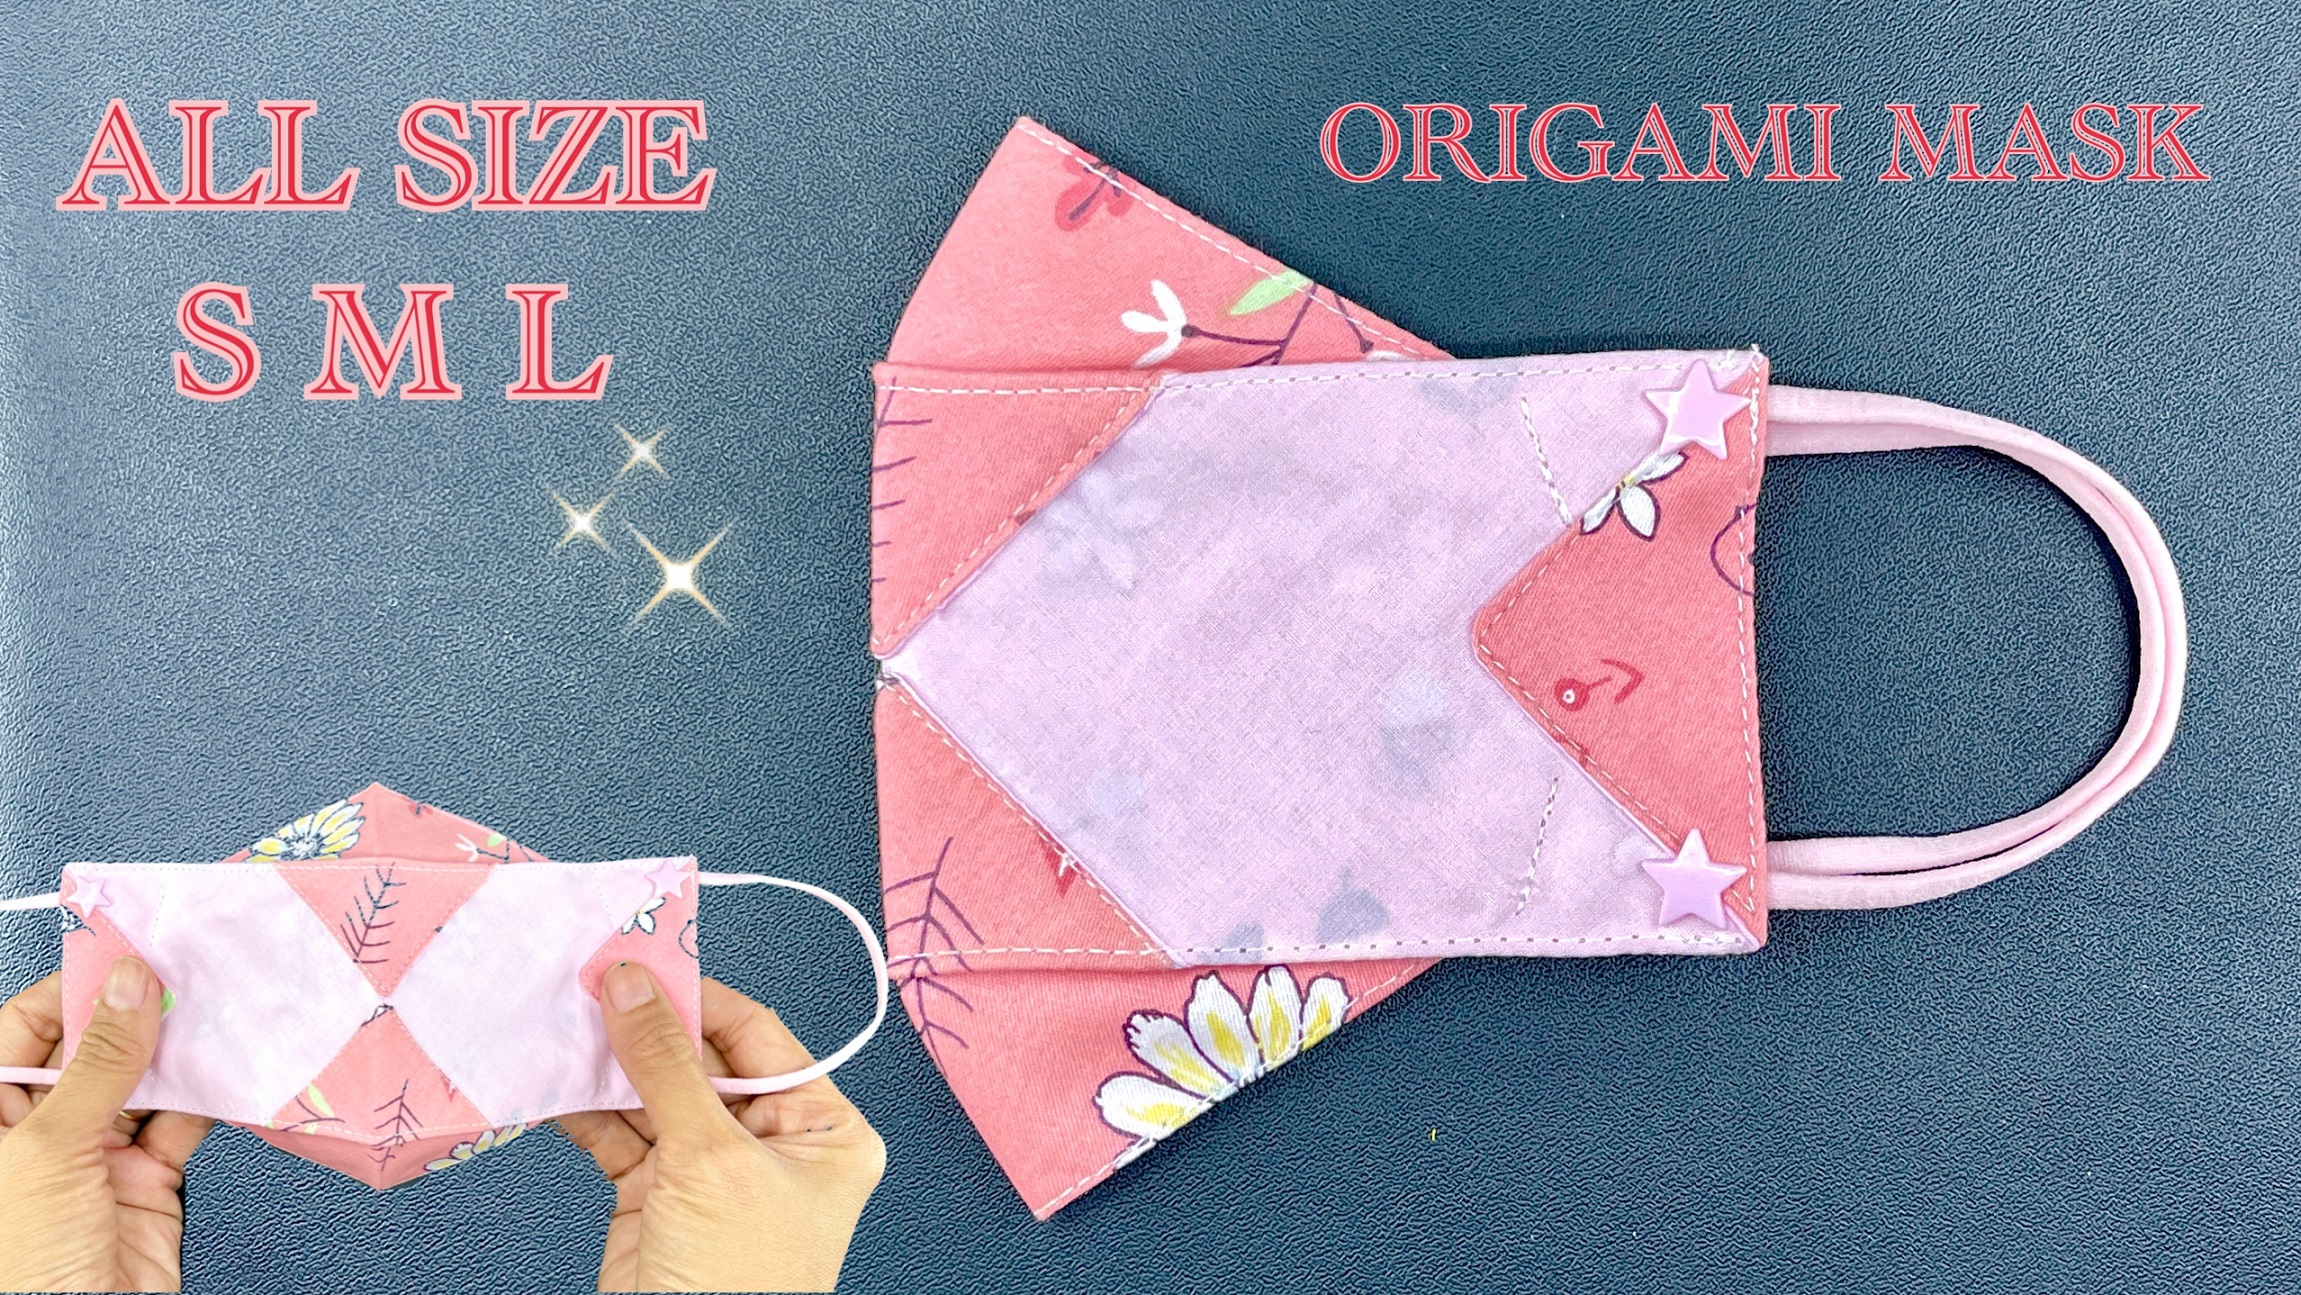 New Design Mask Origami